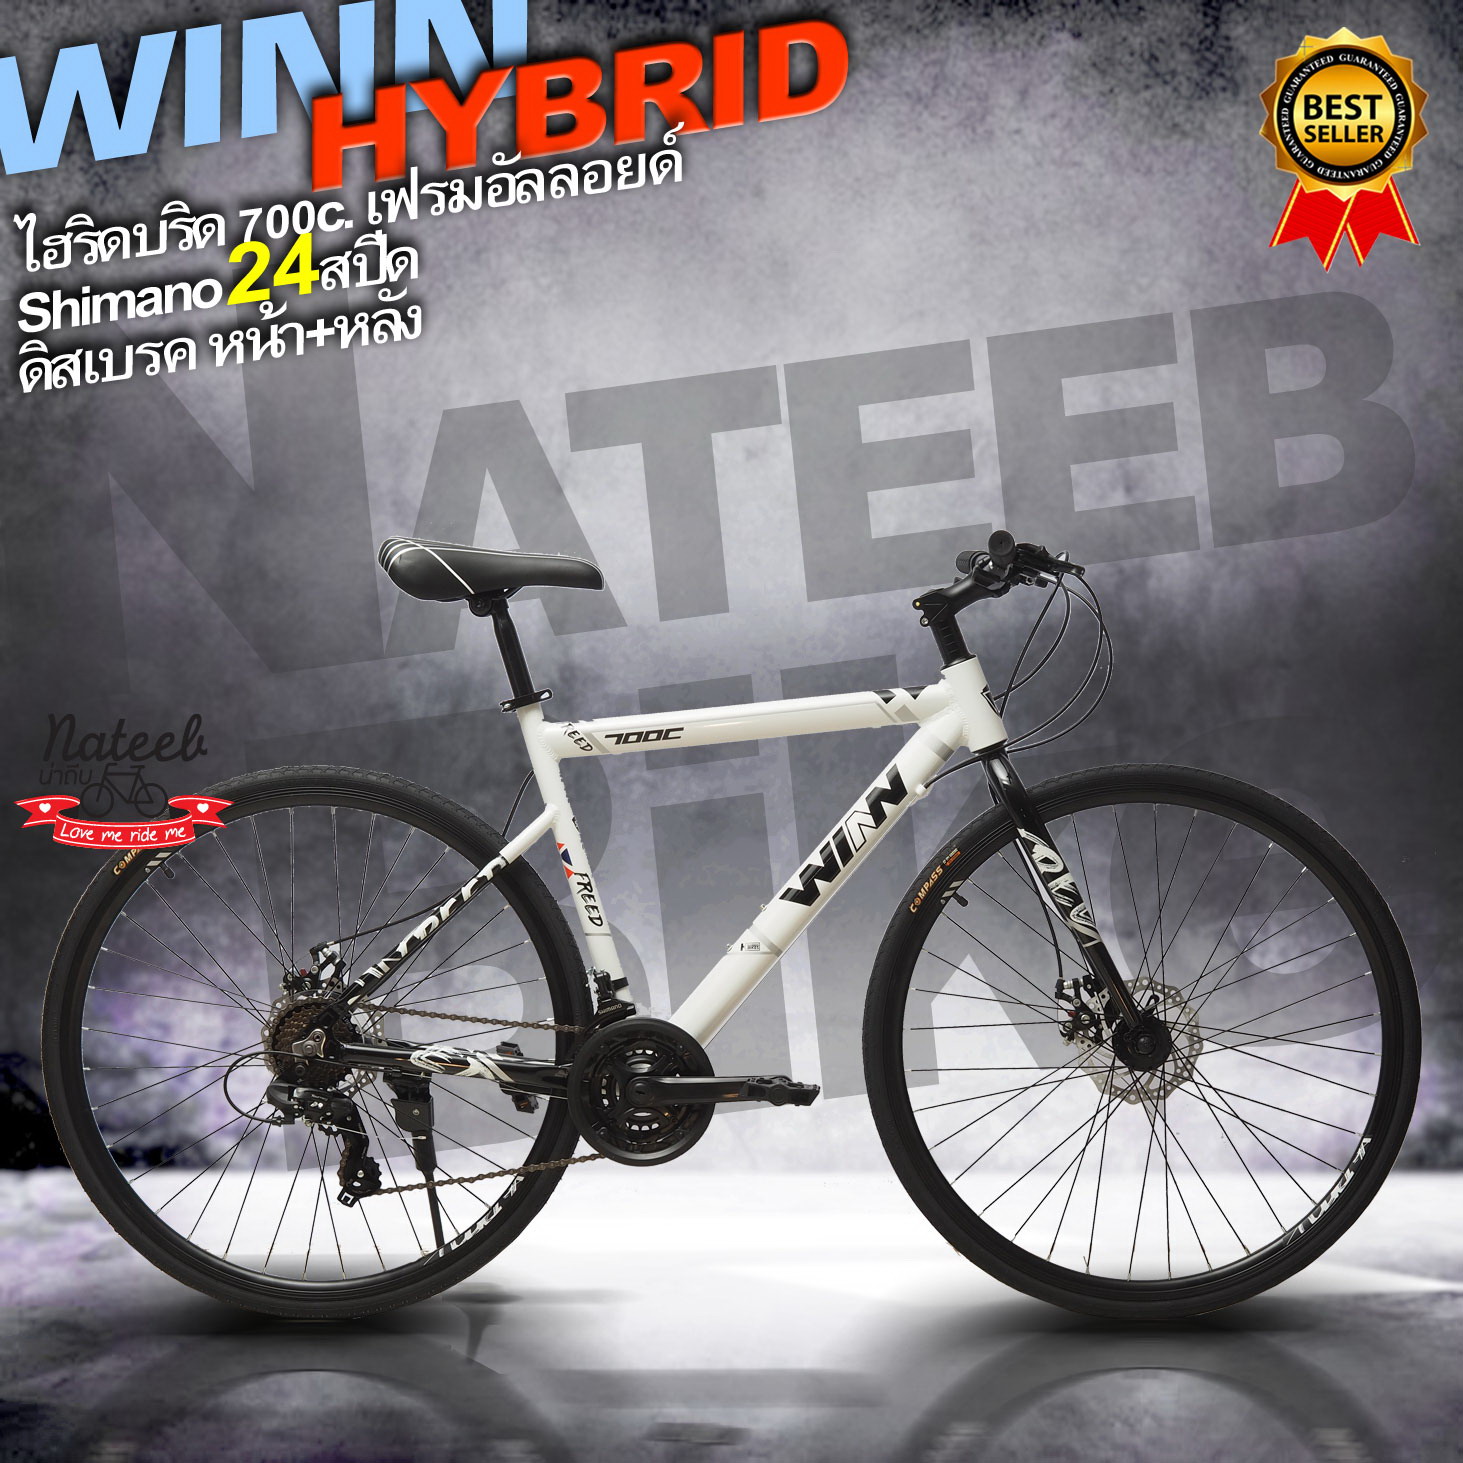 WINN HYBRID จักรยานไฮบริดขนาดวงล้อ เฟรมอัลลอย เกียร์ Shimano 24 Speed